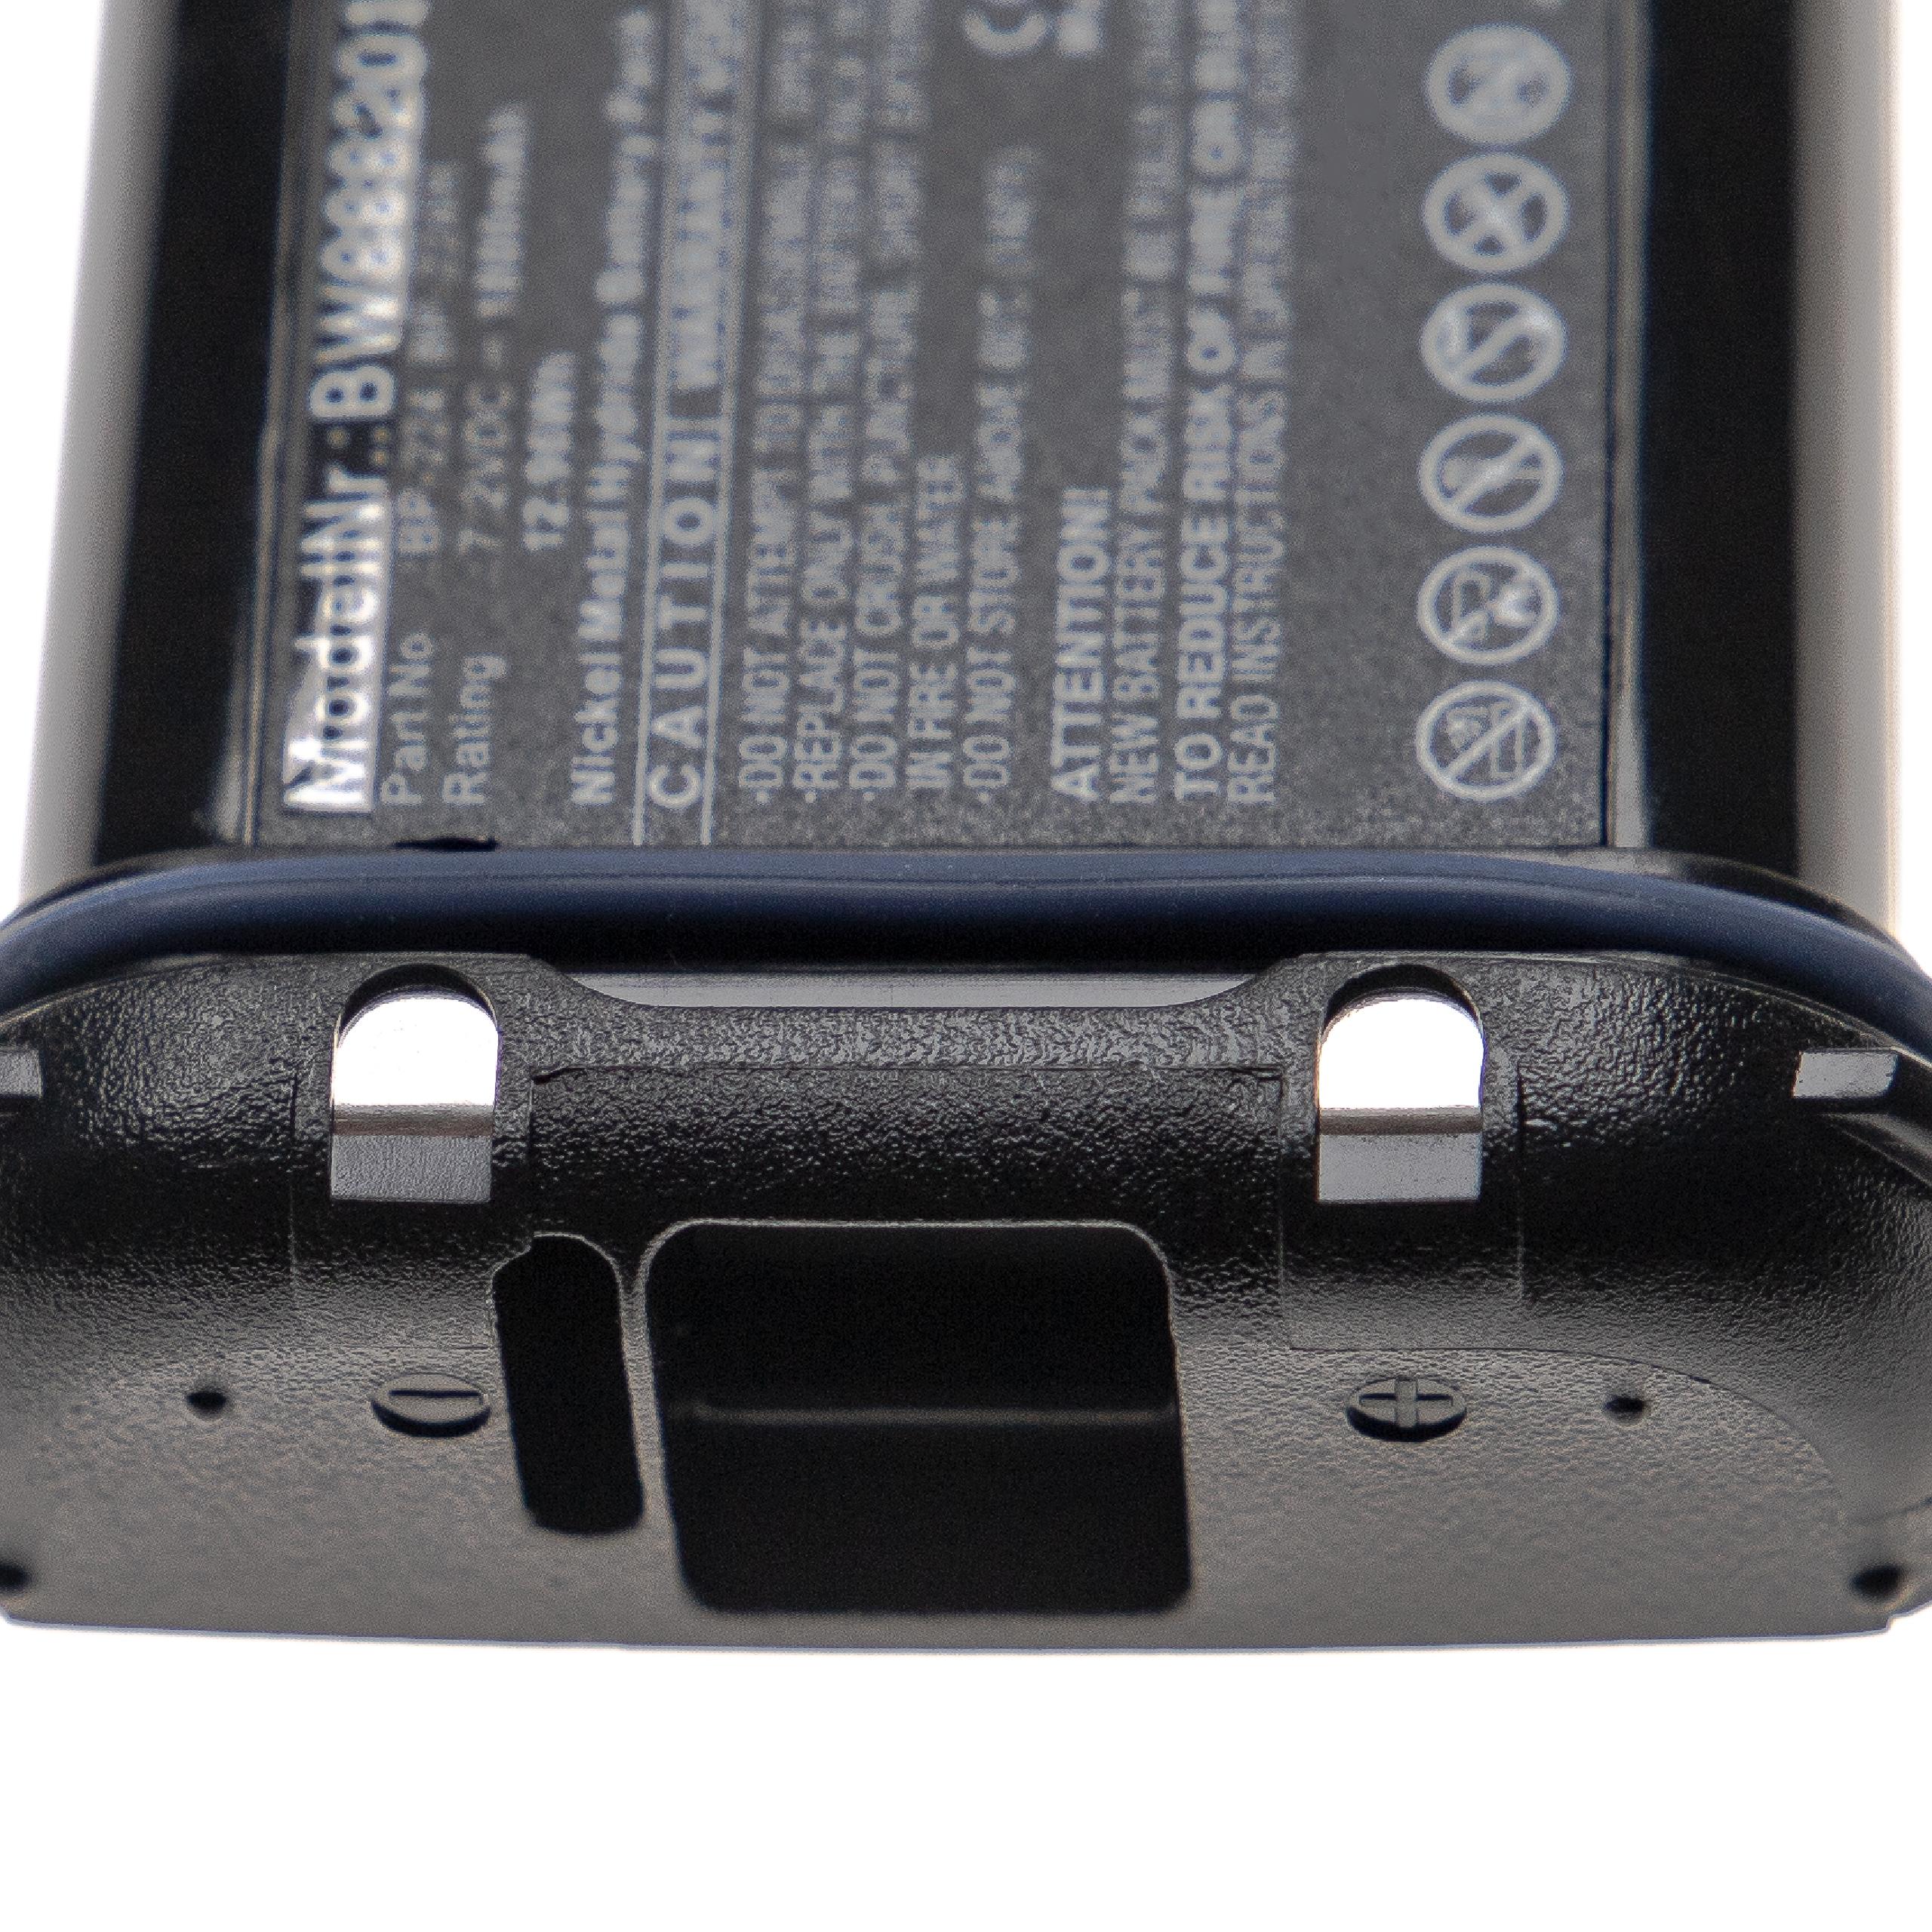 Batería reemplaza Icom BP-224H, BP-224 para radio, walkie-talkie Icom - 1800 mAh 7,2 V NiMH